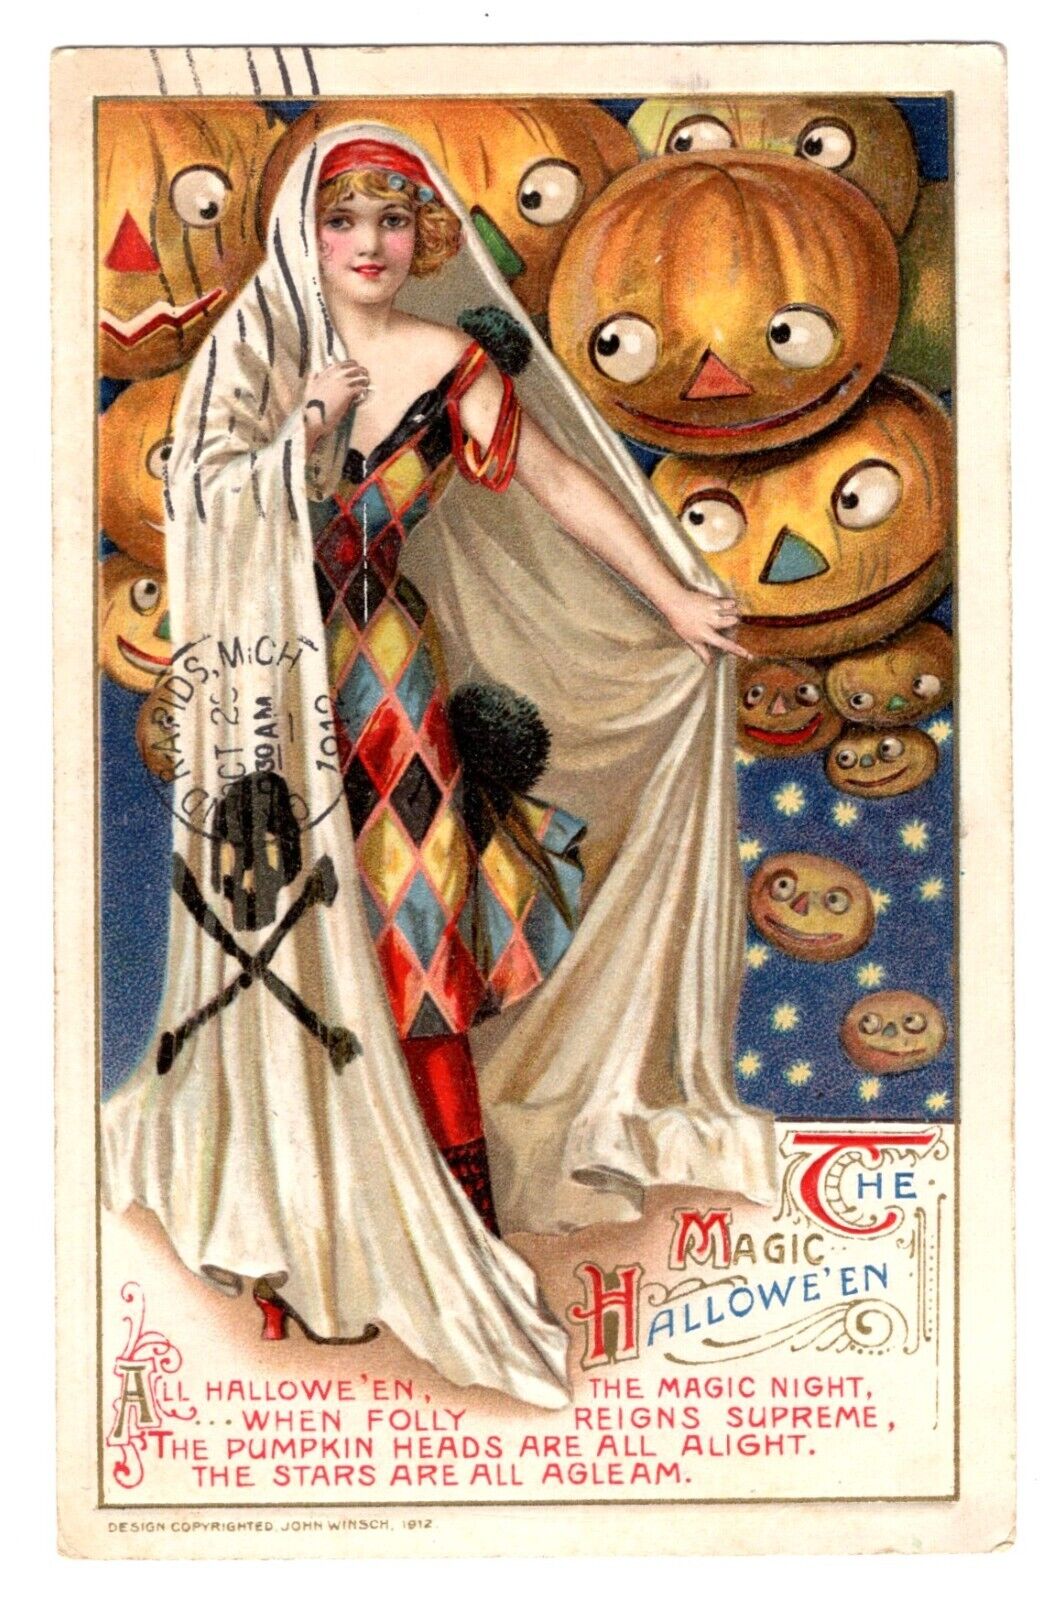 John Winsch Antique 1912 Halloween Girl Magic - Skull & Bones Death Postcard